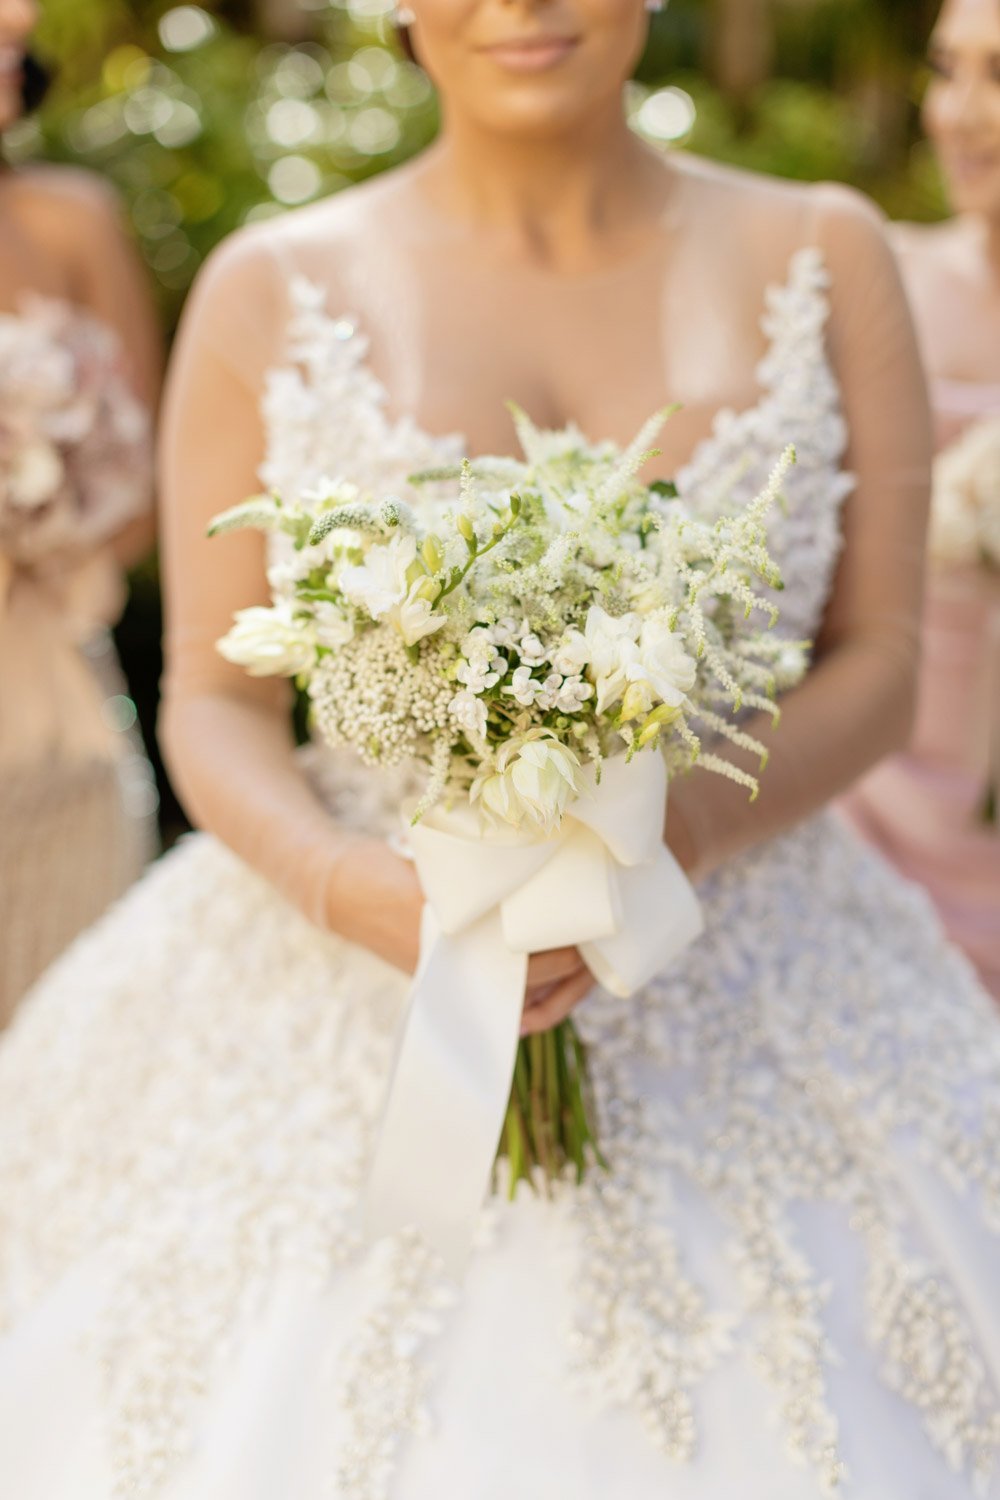 Creamy white flowers create a beautiful bridal bouquet